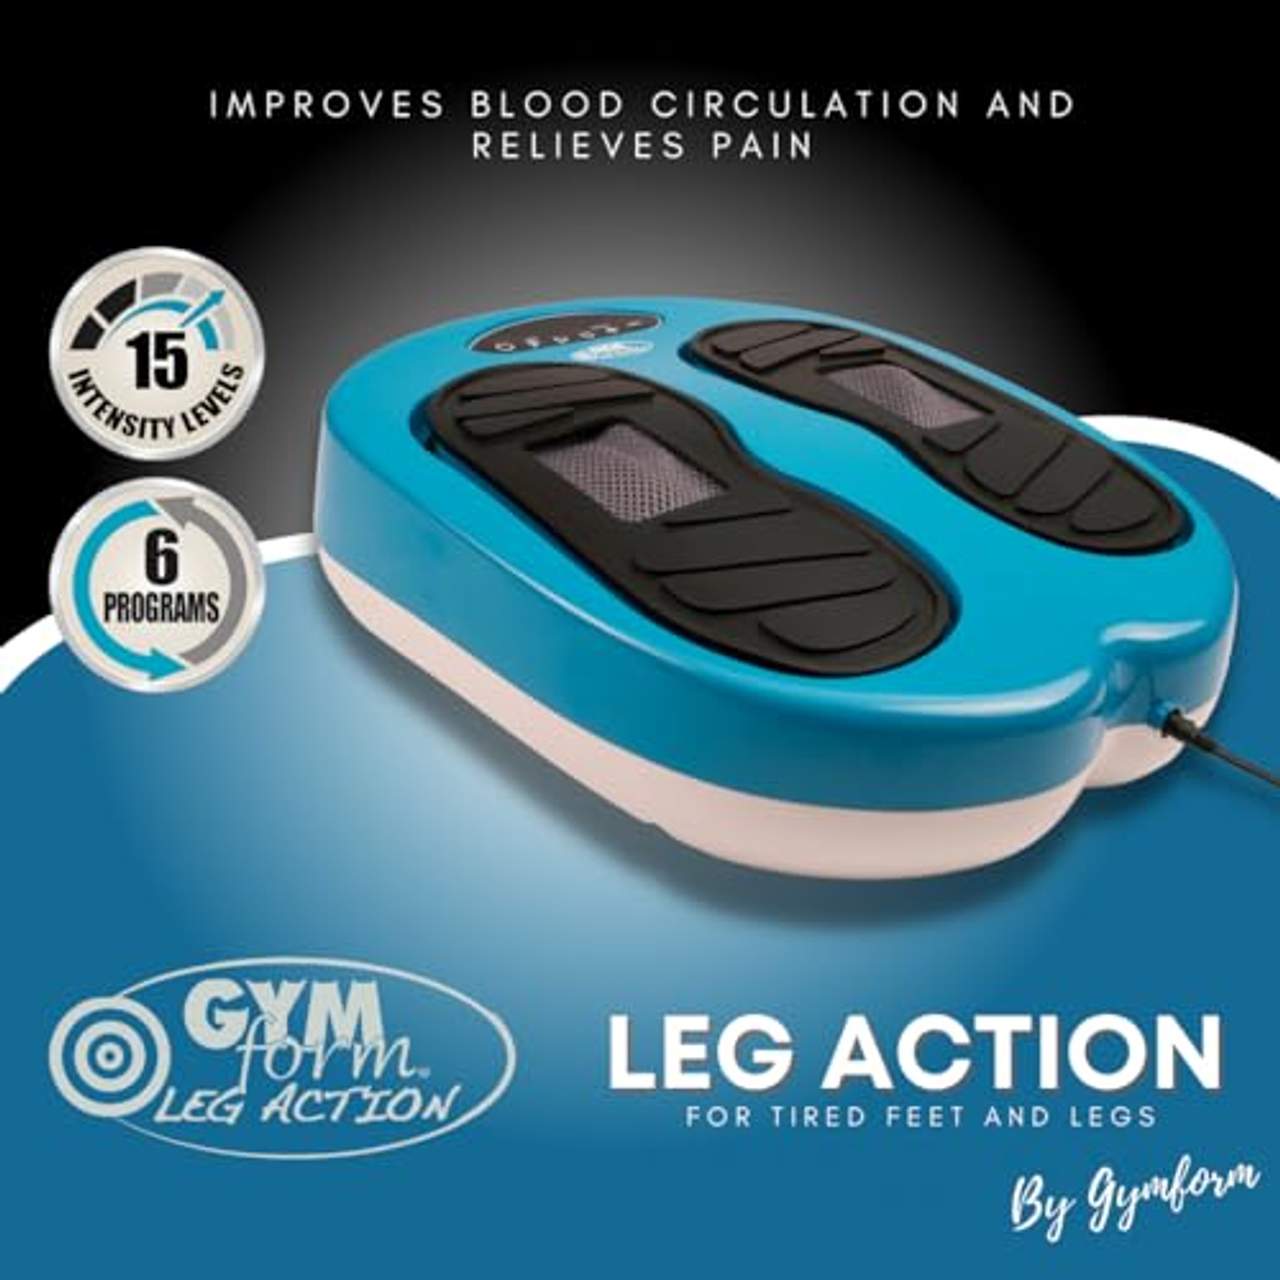 Best Direct Gymform Leg Action Original aus Dem TV-Werbung